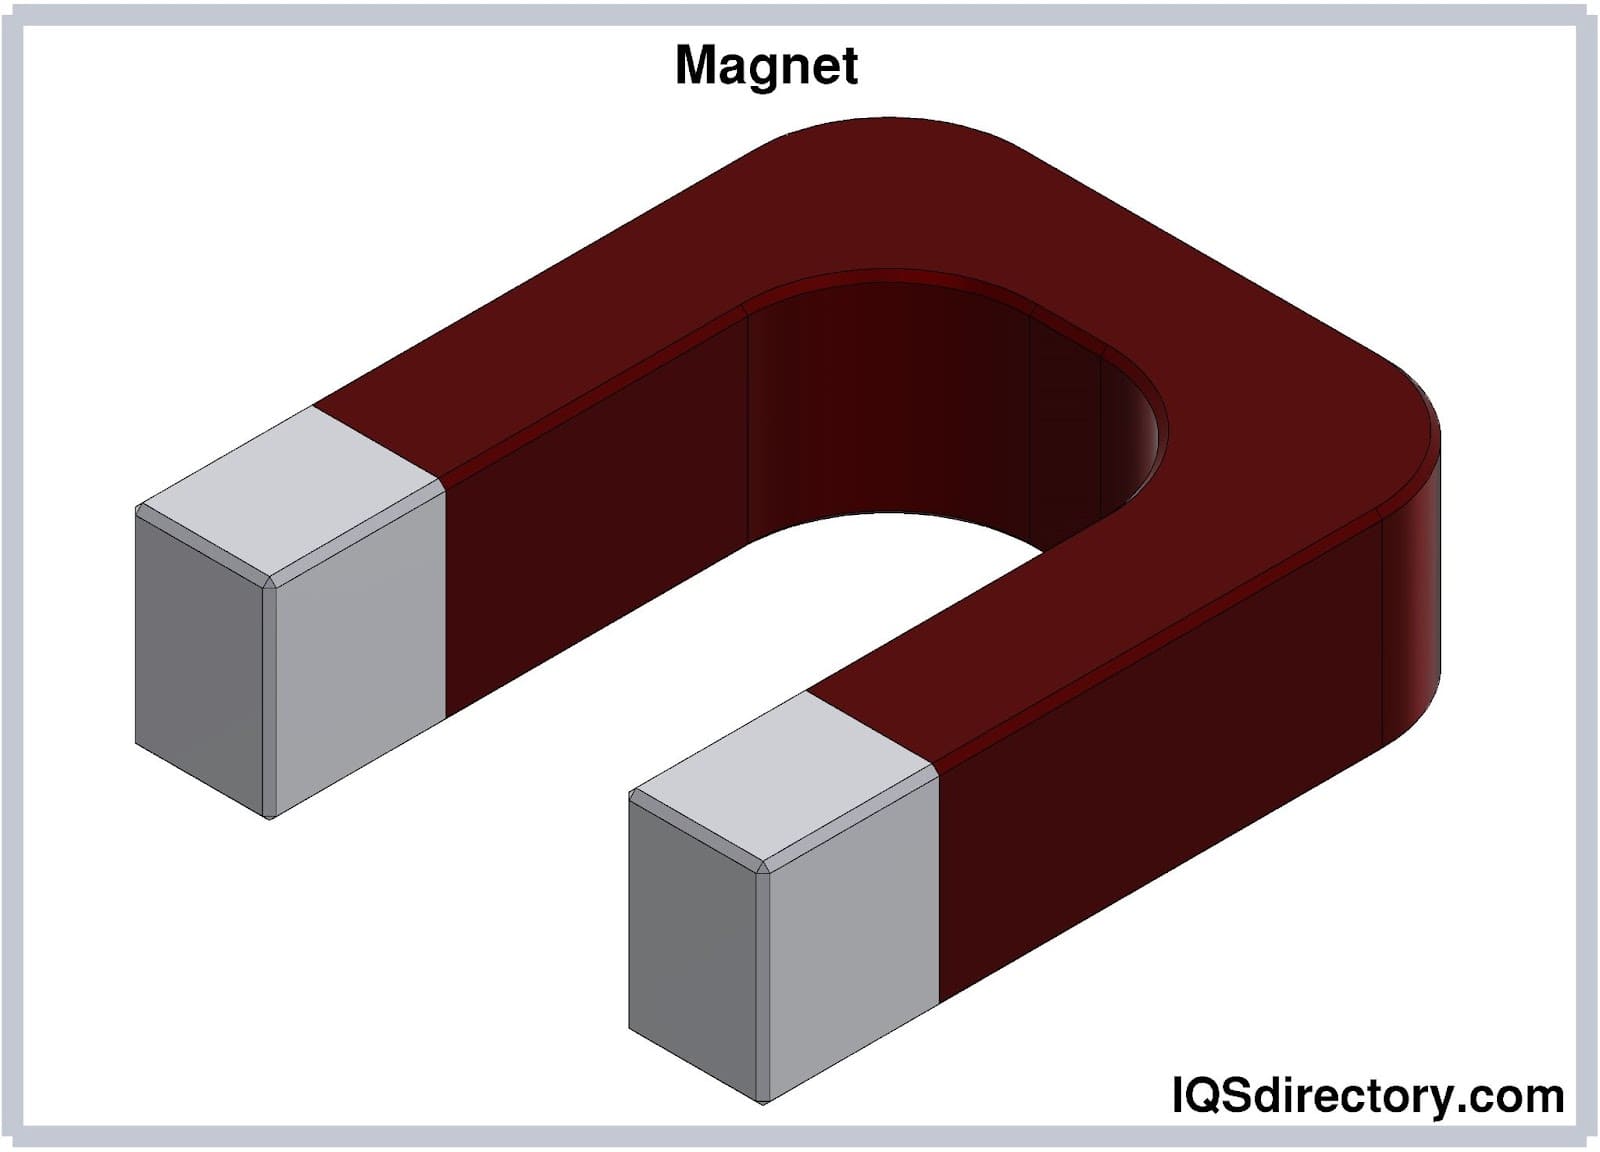 Puritan Magnetics, Inc. - Magnetic Separators/Magnetic Separation  Equipment/Separation and Material Handling Equipment, Magnetic Separators.